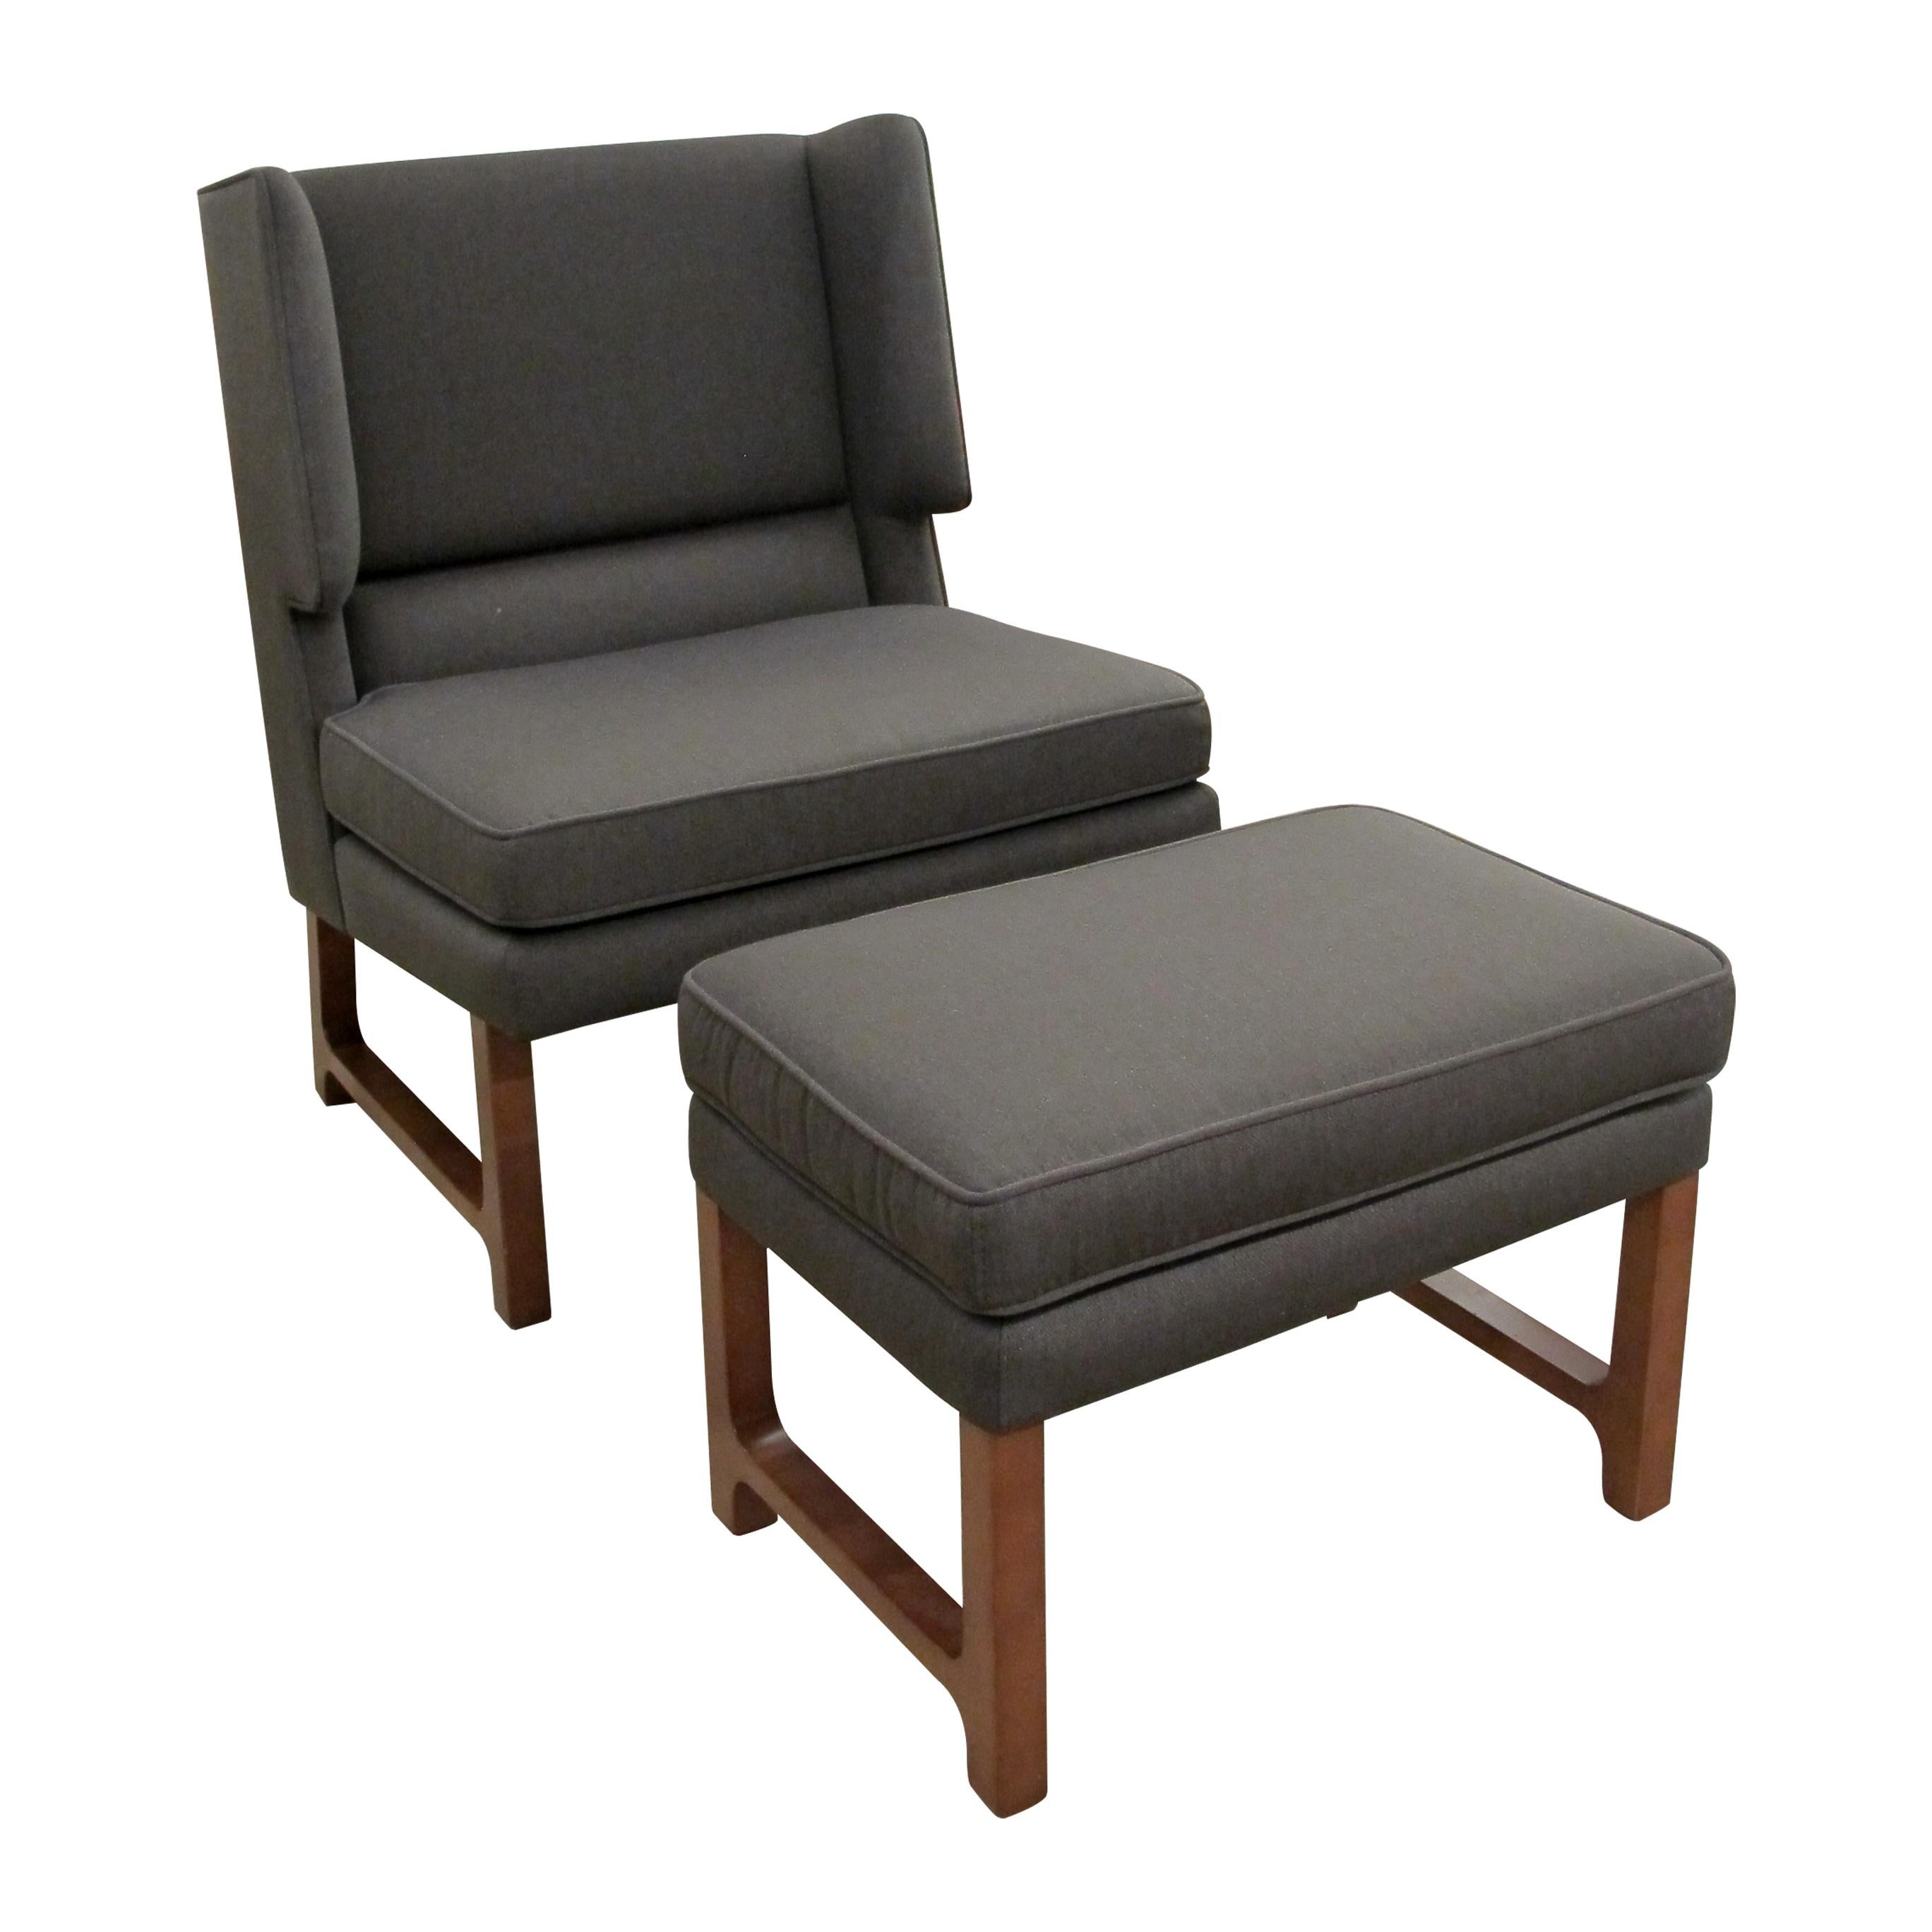 Moderne Grand fauteuil moderne anglais avec son tabouret assorti en vente